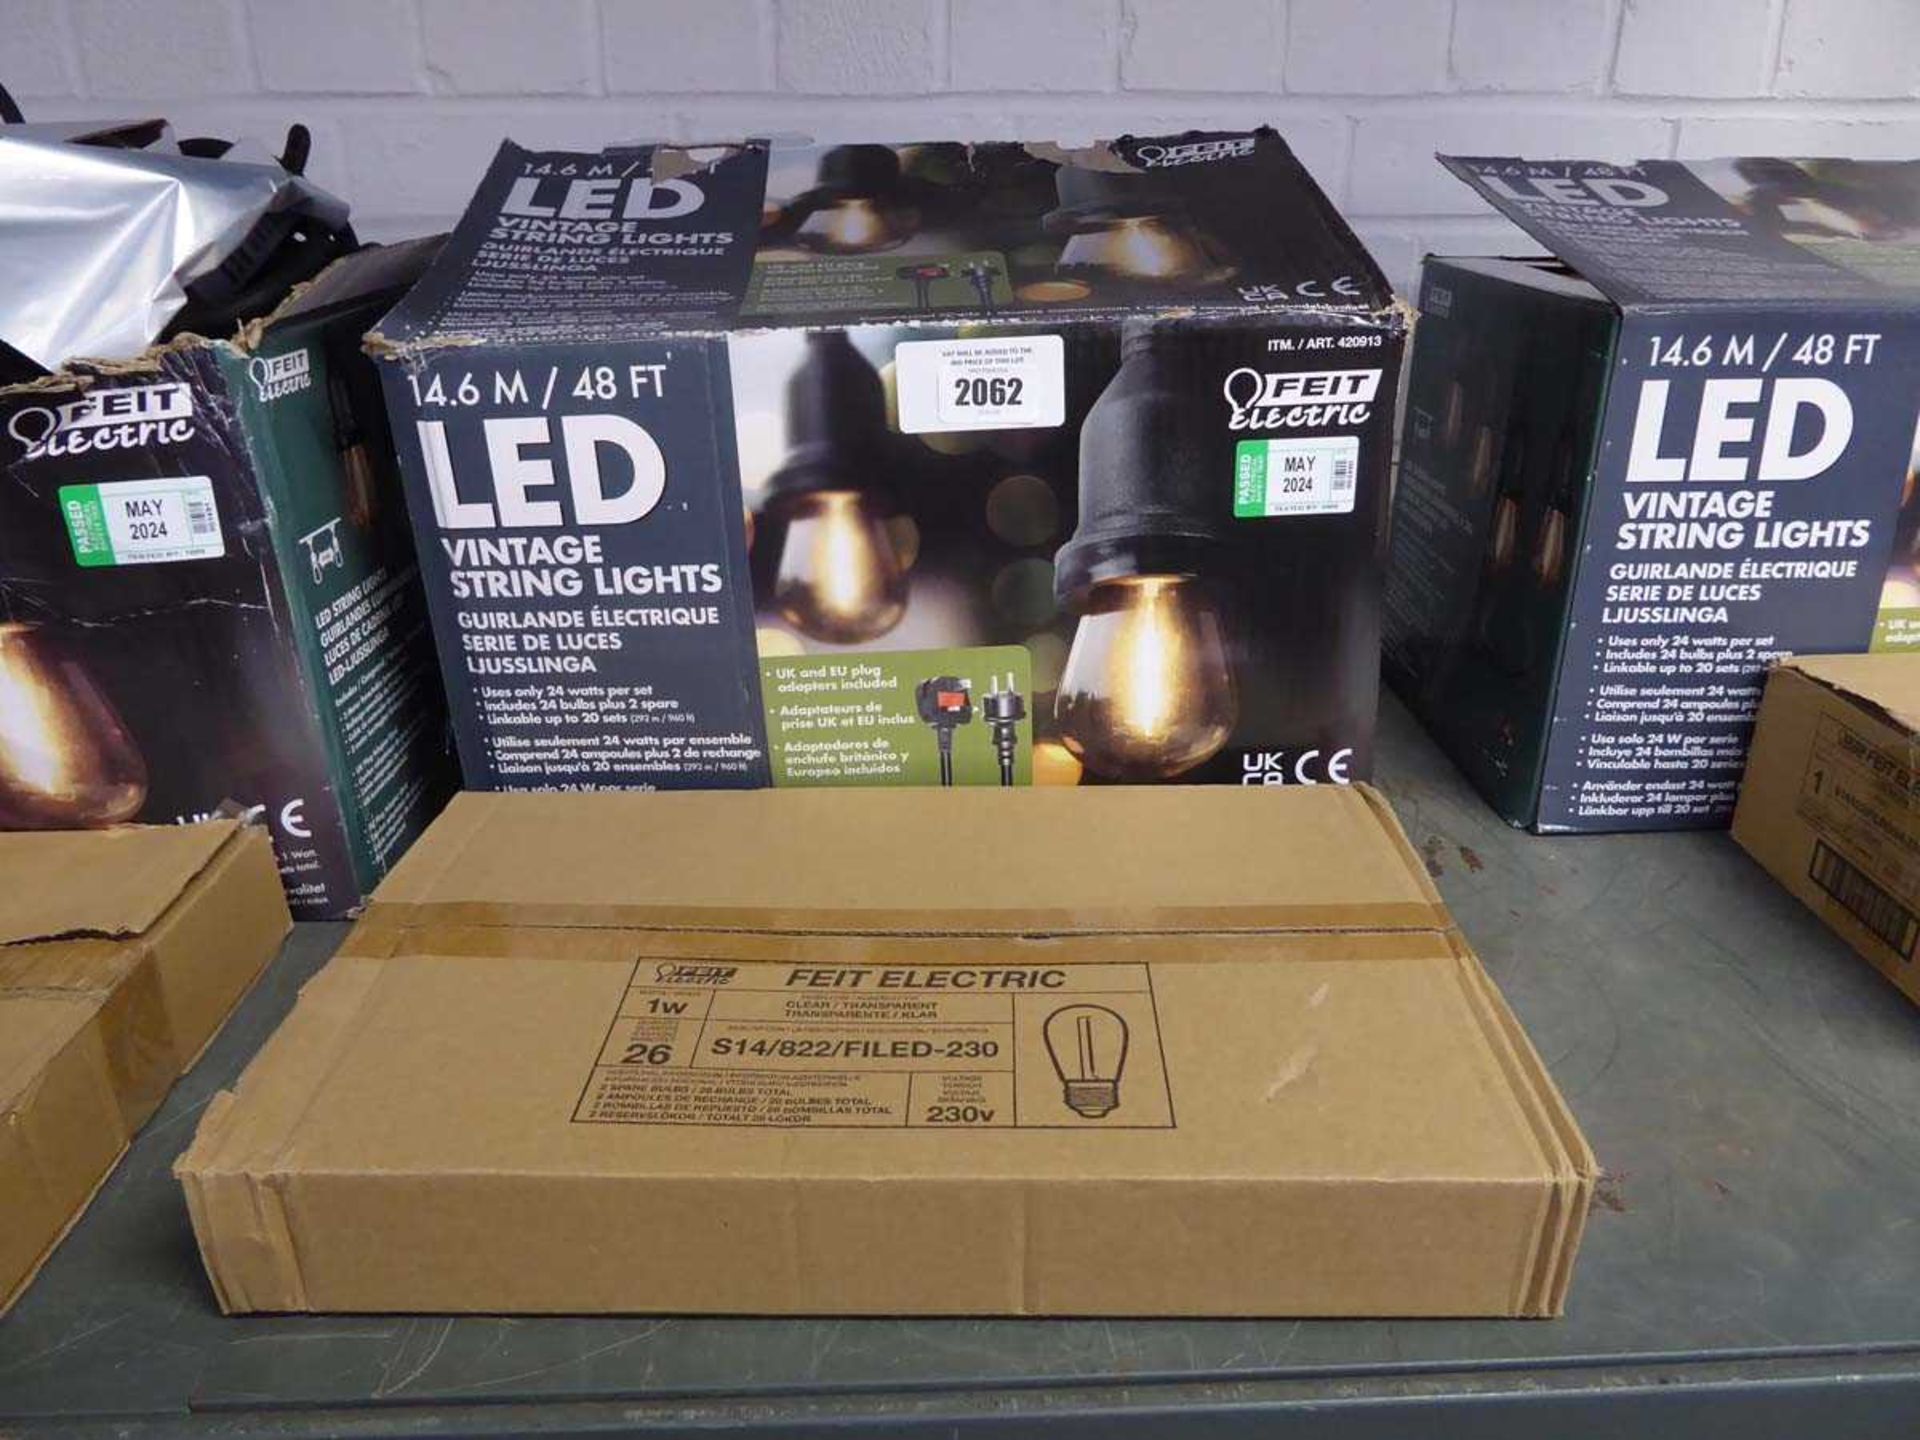 +VAT Boxed set of LED vintage garden string lights with bulbs